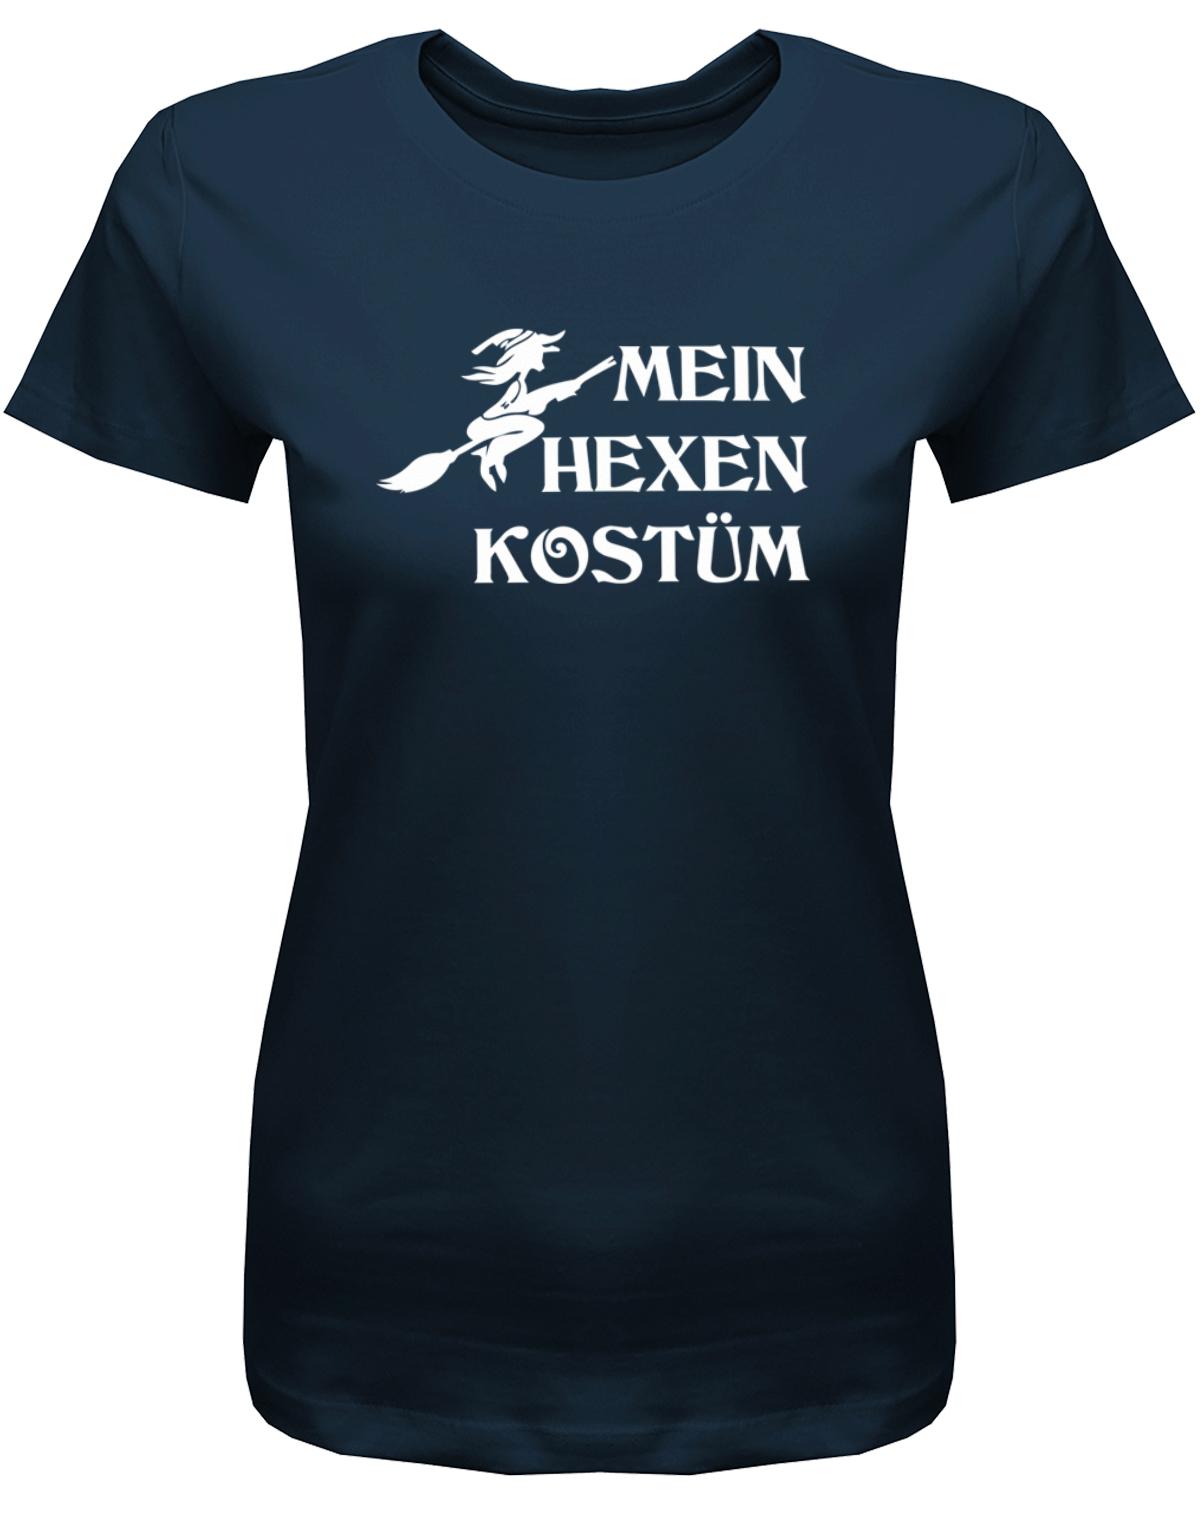 Mein-hexen-Kost-m-Damen-Shirt-Fasching-Karneval-Navy